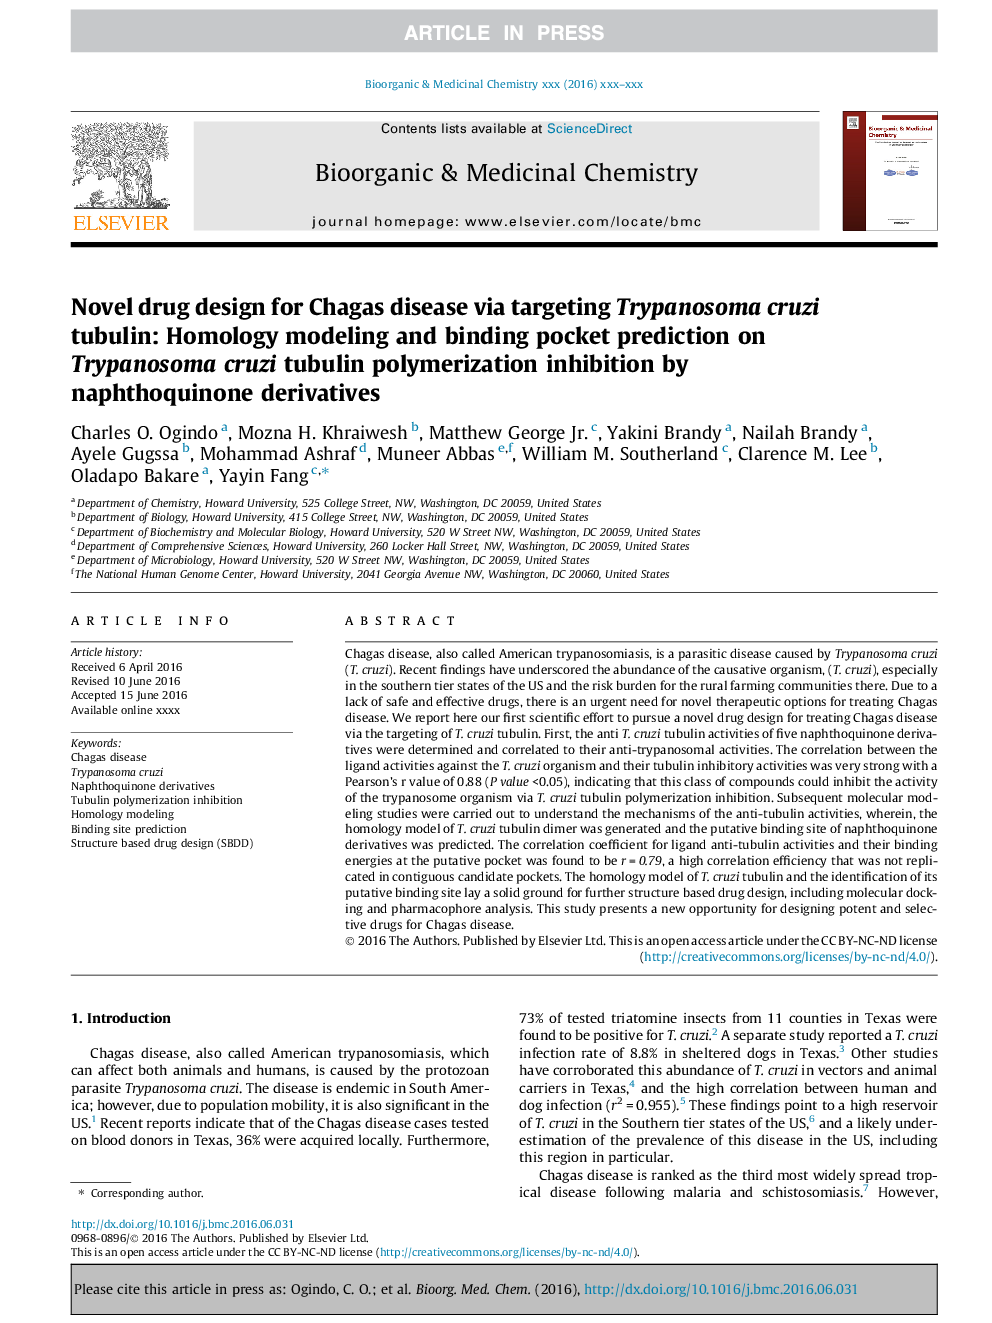 Novel drug design for Chagas disease via targeting Trypanosoma cruzi tubulin: Homology modeling and binding pocket prediction on Trypanosoma cruzi tubulin polymerization inhibition by naphthoquinone derivatives